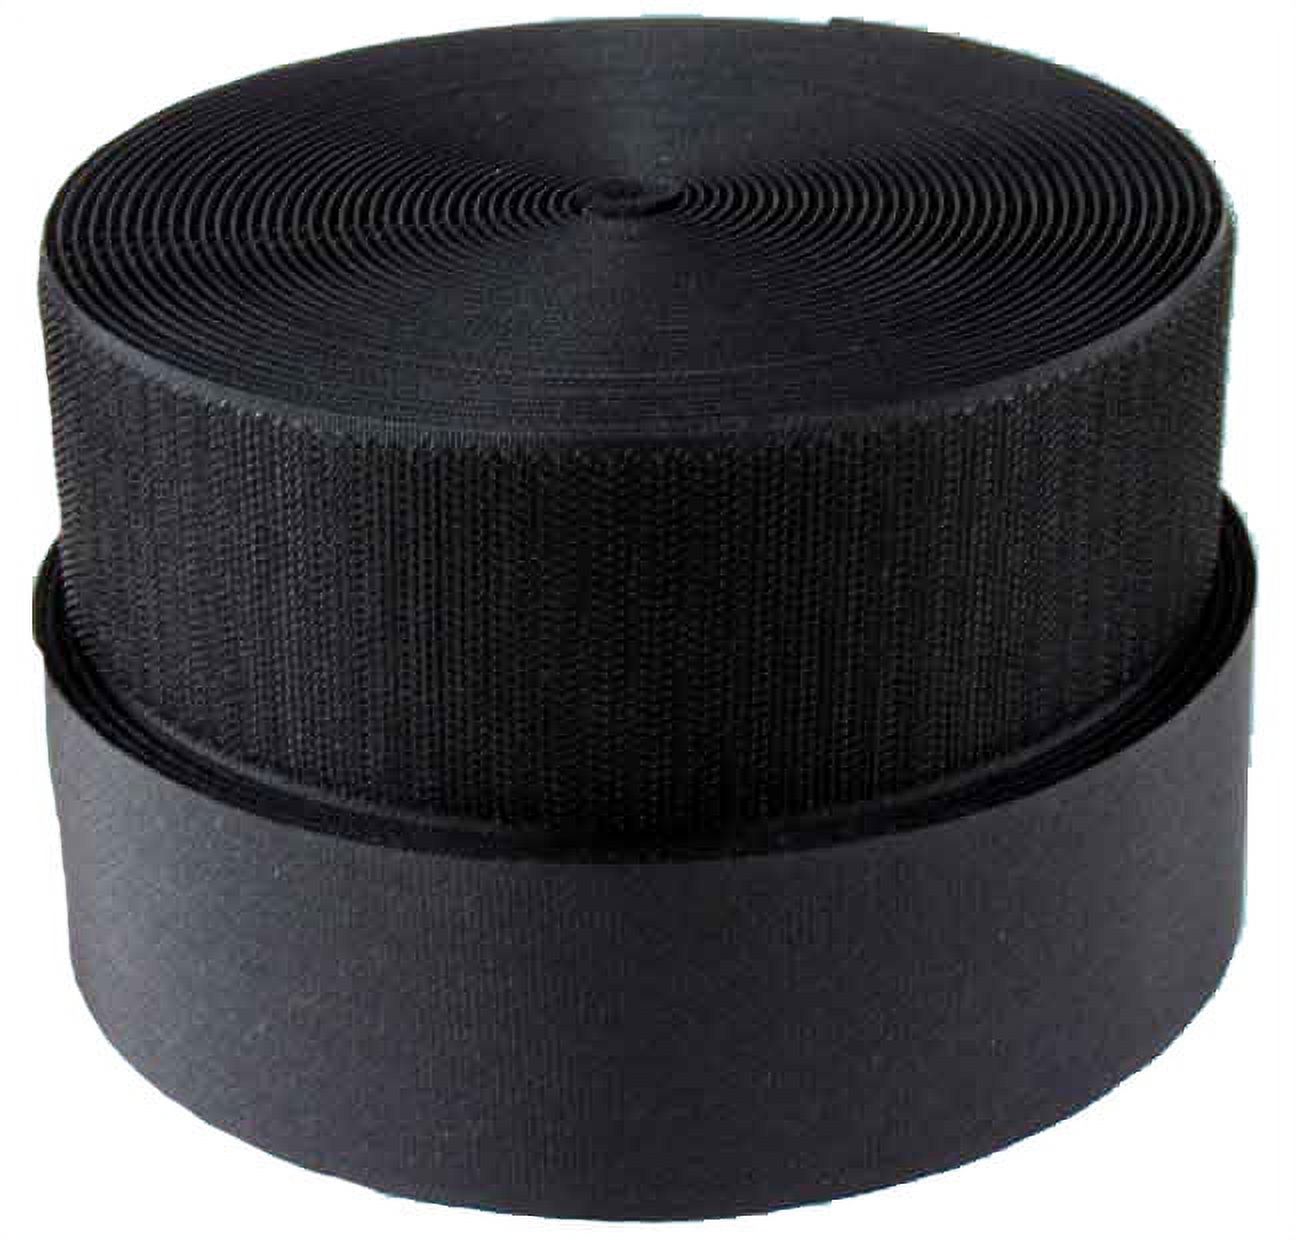 Velcro Brand - Black Sew on Hook and Loop (1 inch, 5 yards